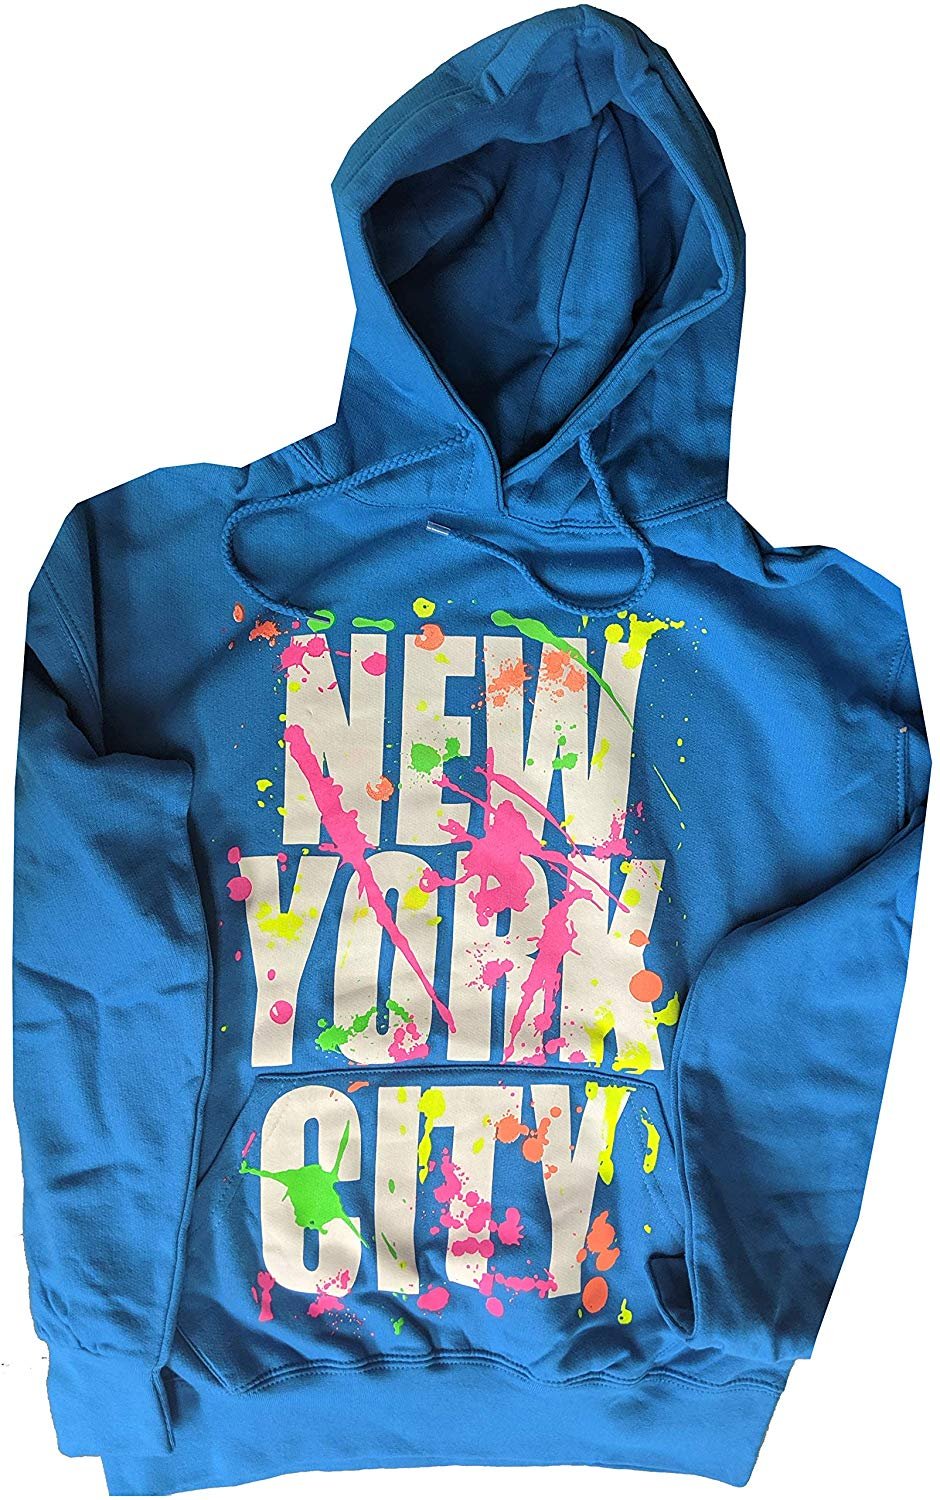 New York Paint Splash Hoodie Sweatshirt Adult Unisex Turquoise